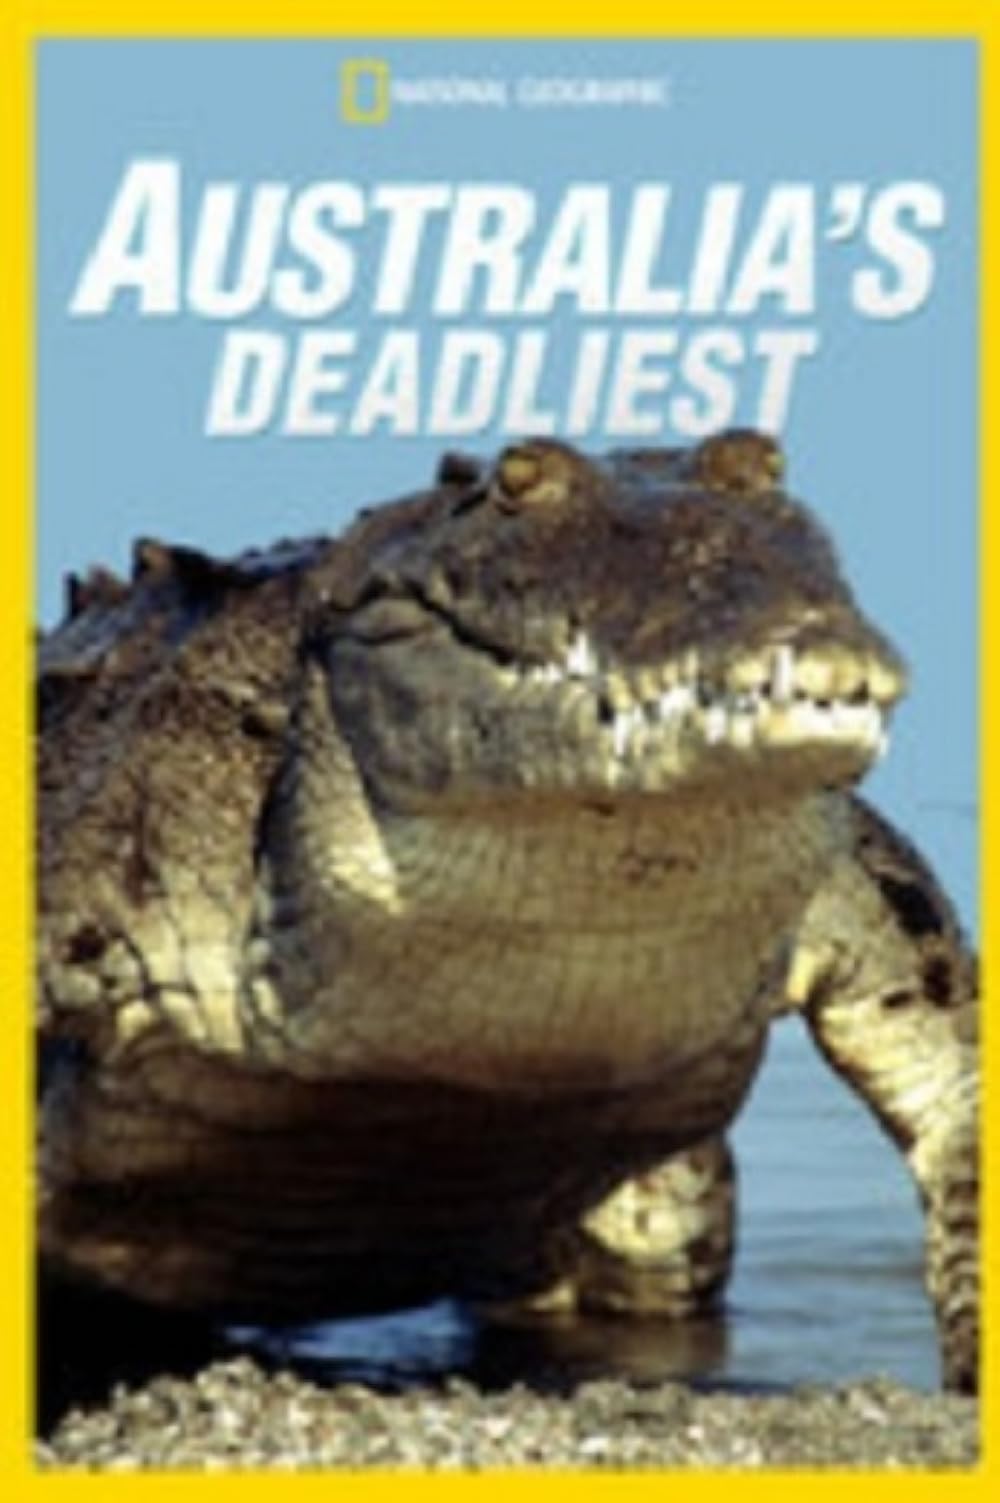 Australia's Deadliest (2013)